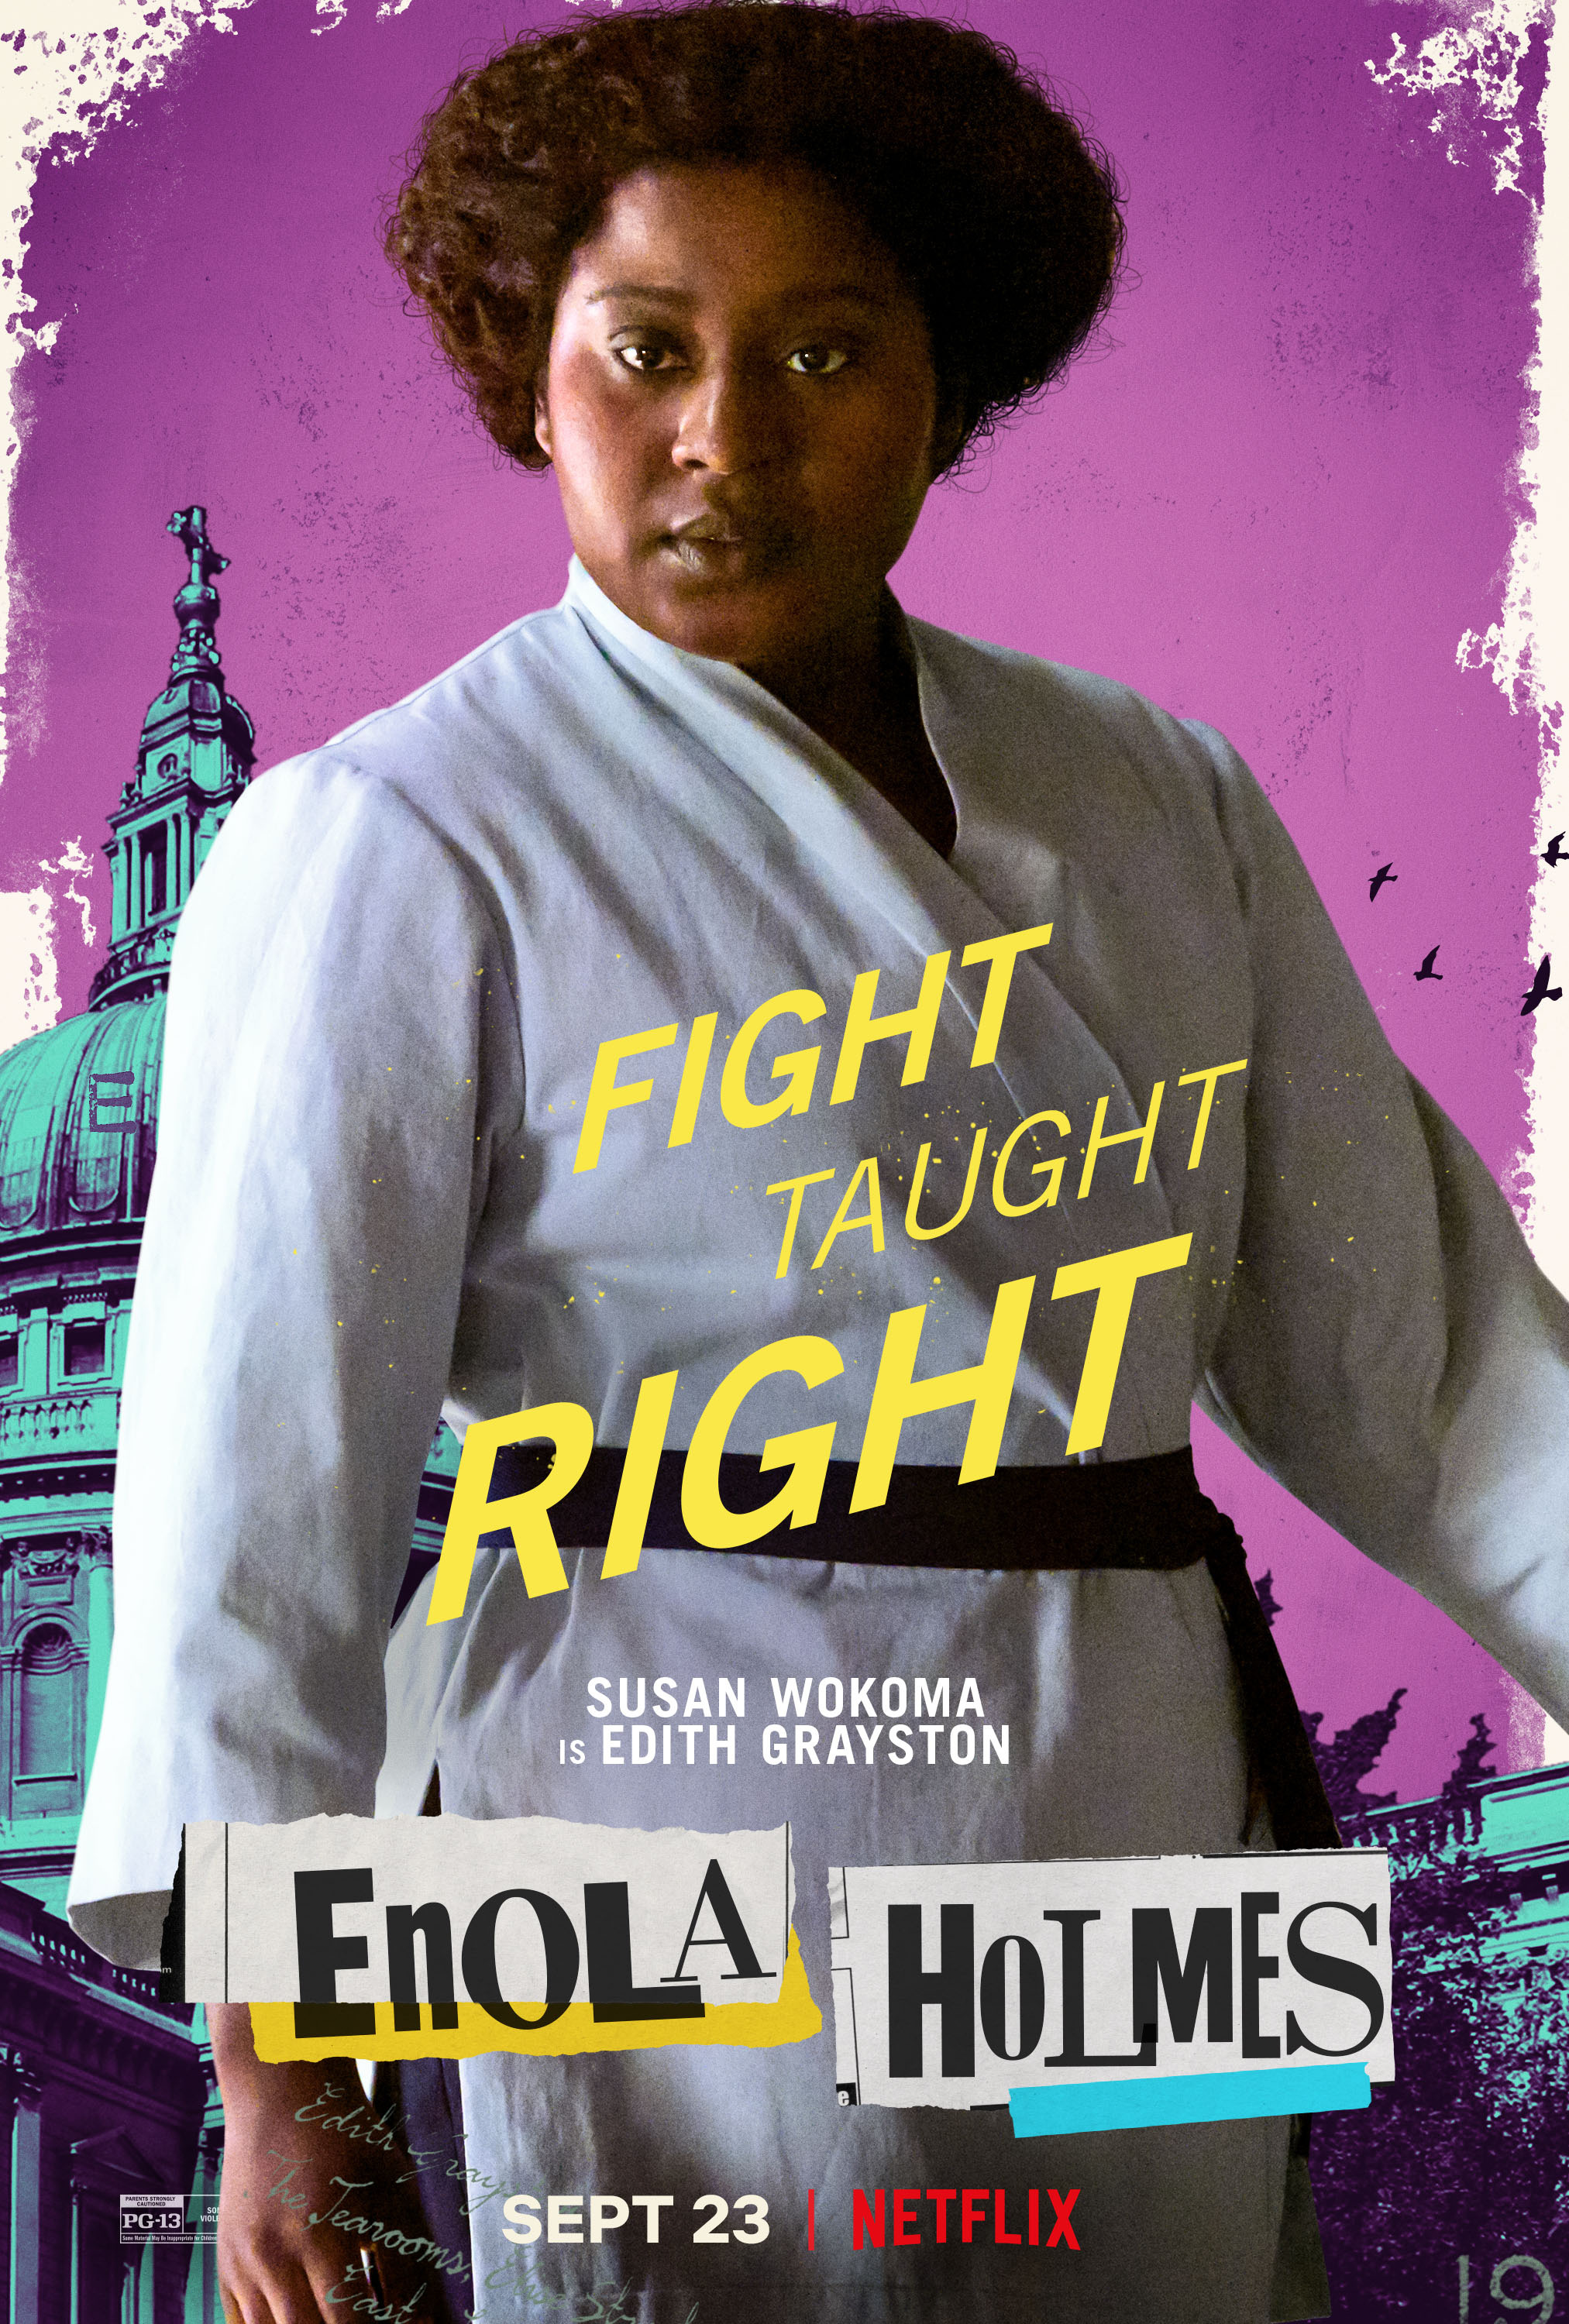 Mega Sized Movie Poster Image for Enola Holmes (#8 of 9)